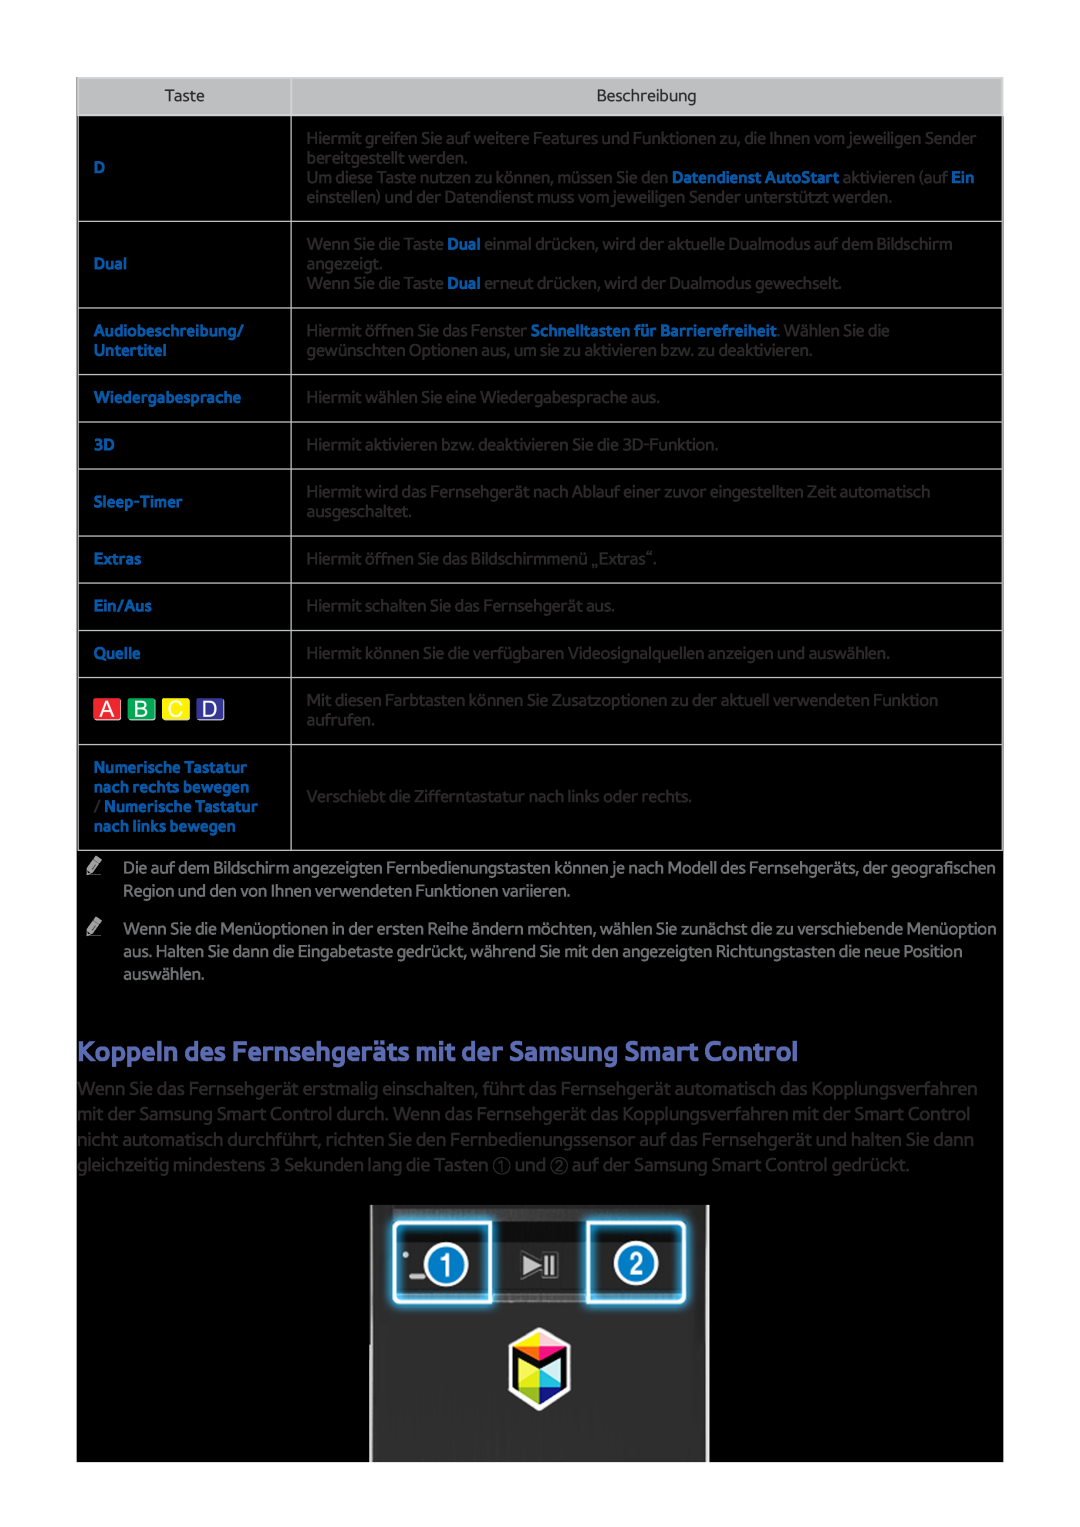 Samsung UE48JU6440WXXH manual Koppeln des Fernsehgeräts mit der Samsung Smart Control, Dual, Audiobeschreibung, Untertitel 